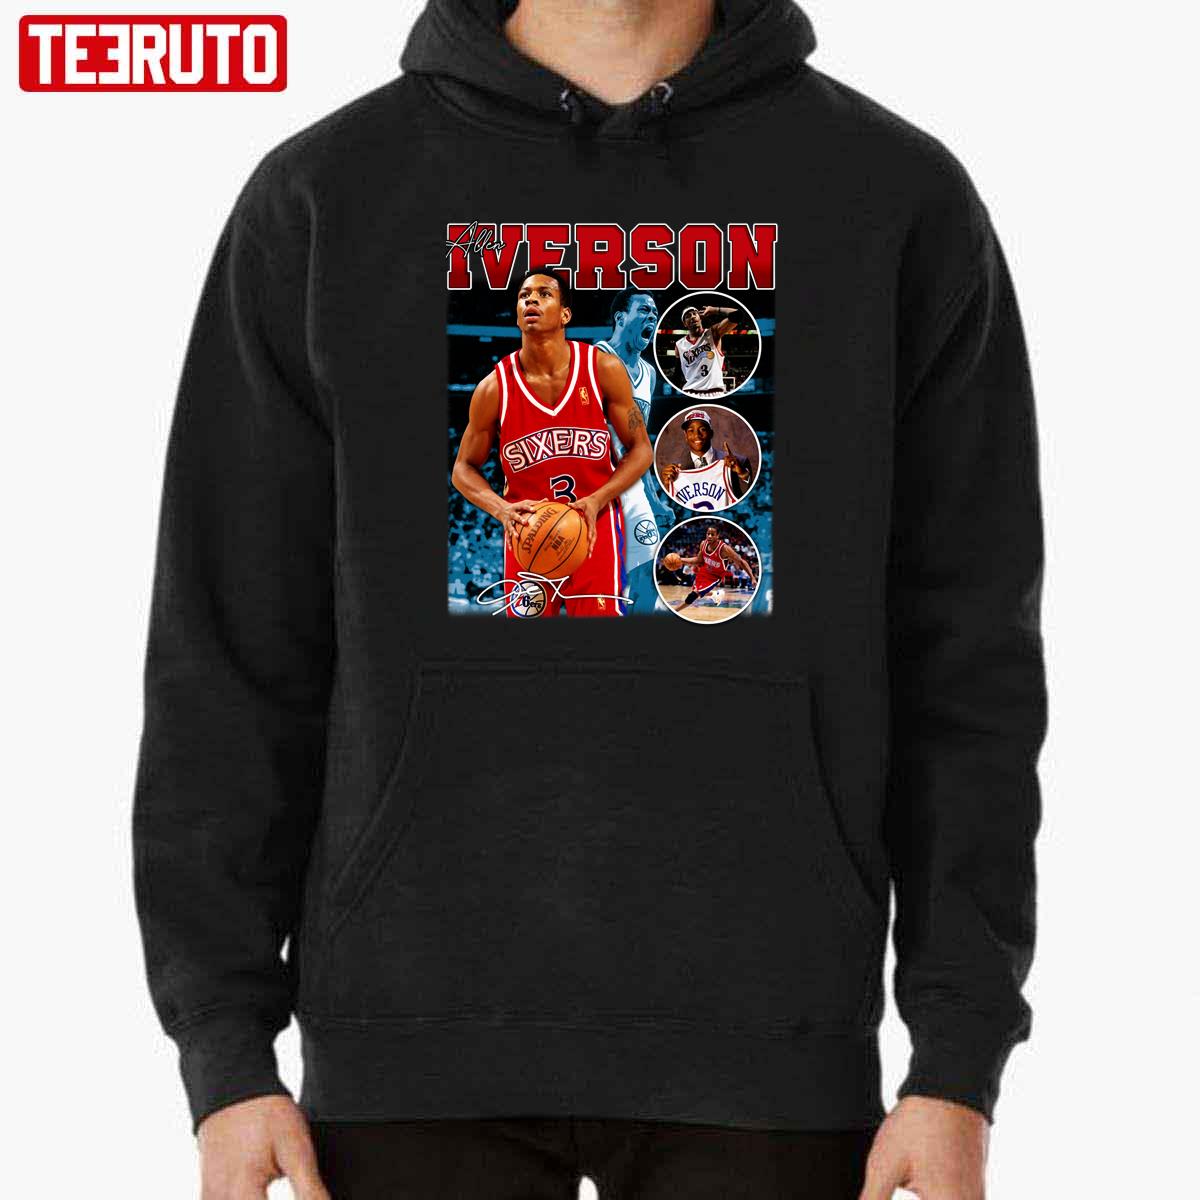 Allen Iverson The Answer Basketball Legend Signature Vintage Retro 80s 90s Bootleg Rap Style Sweatshirt